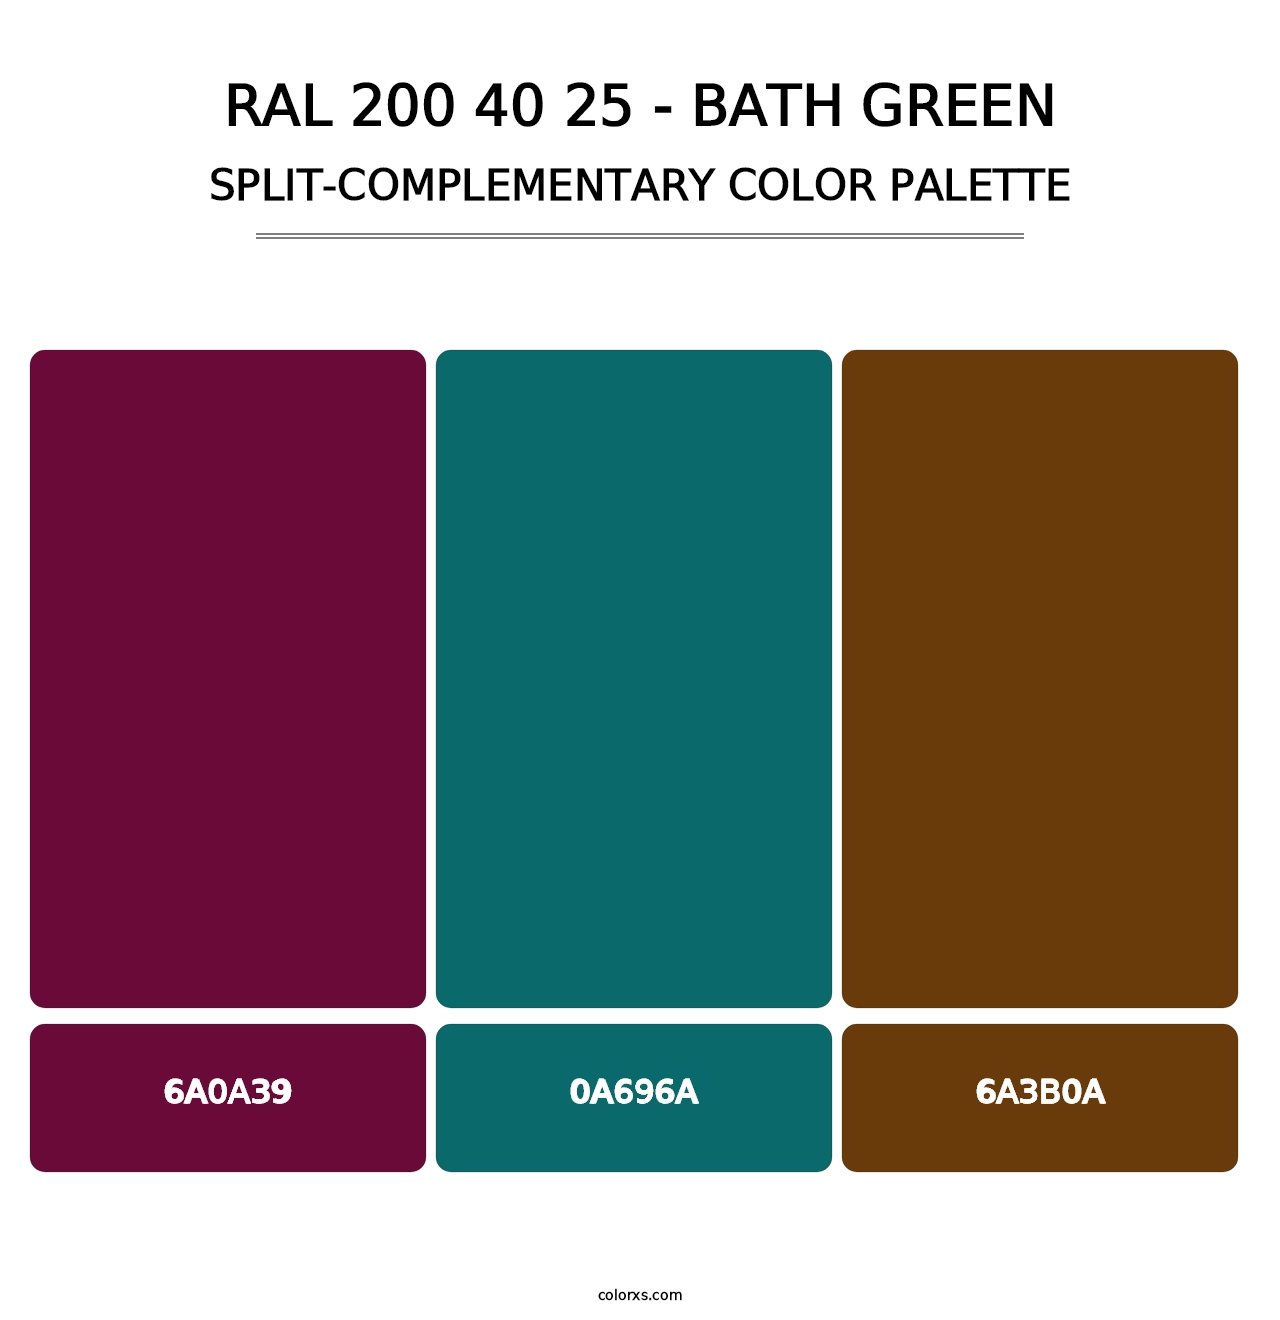 RAL 200 40 25 - Bath Green - Split-Complementary Color Palette